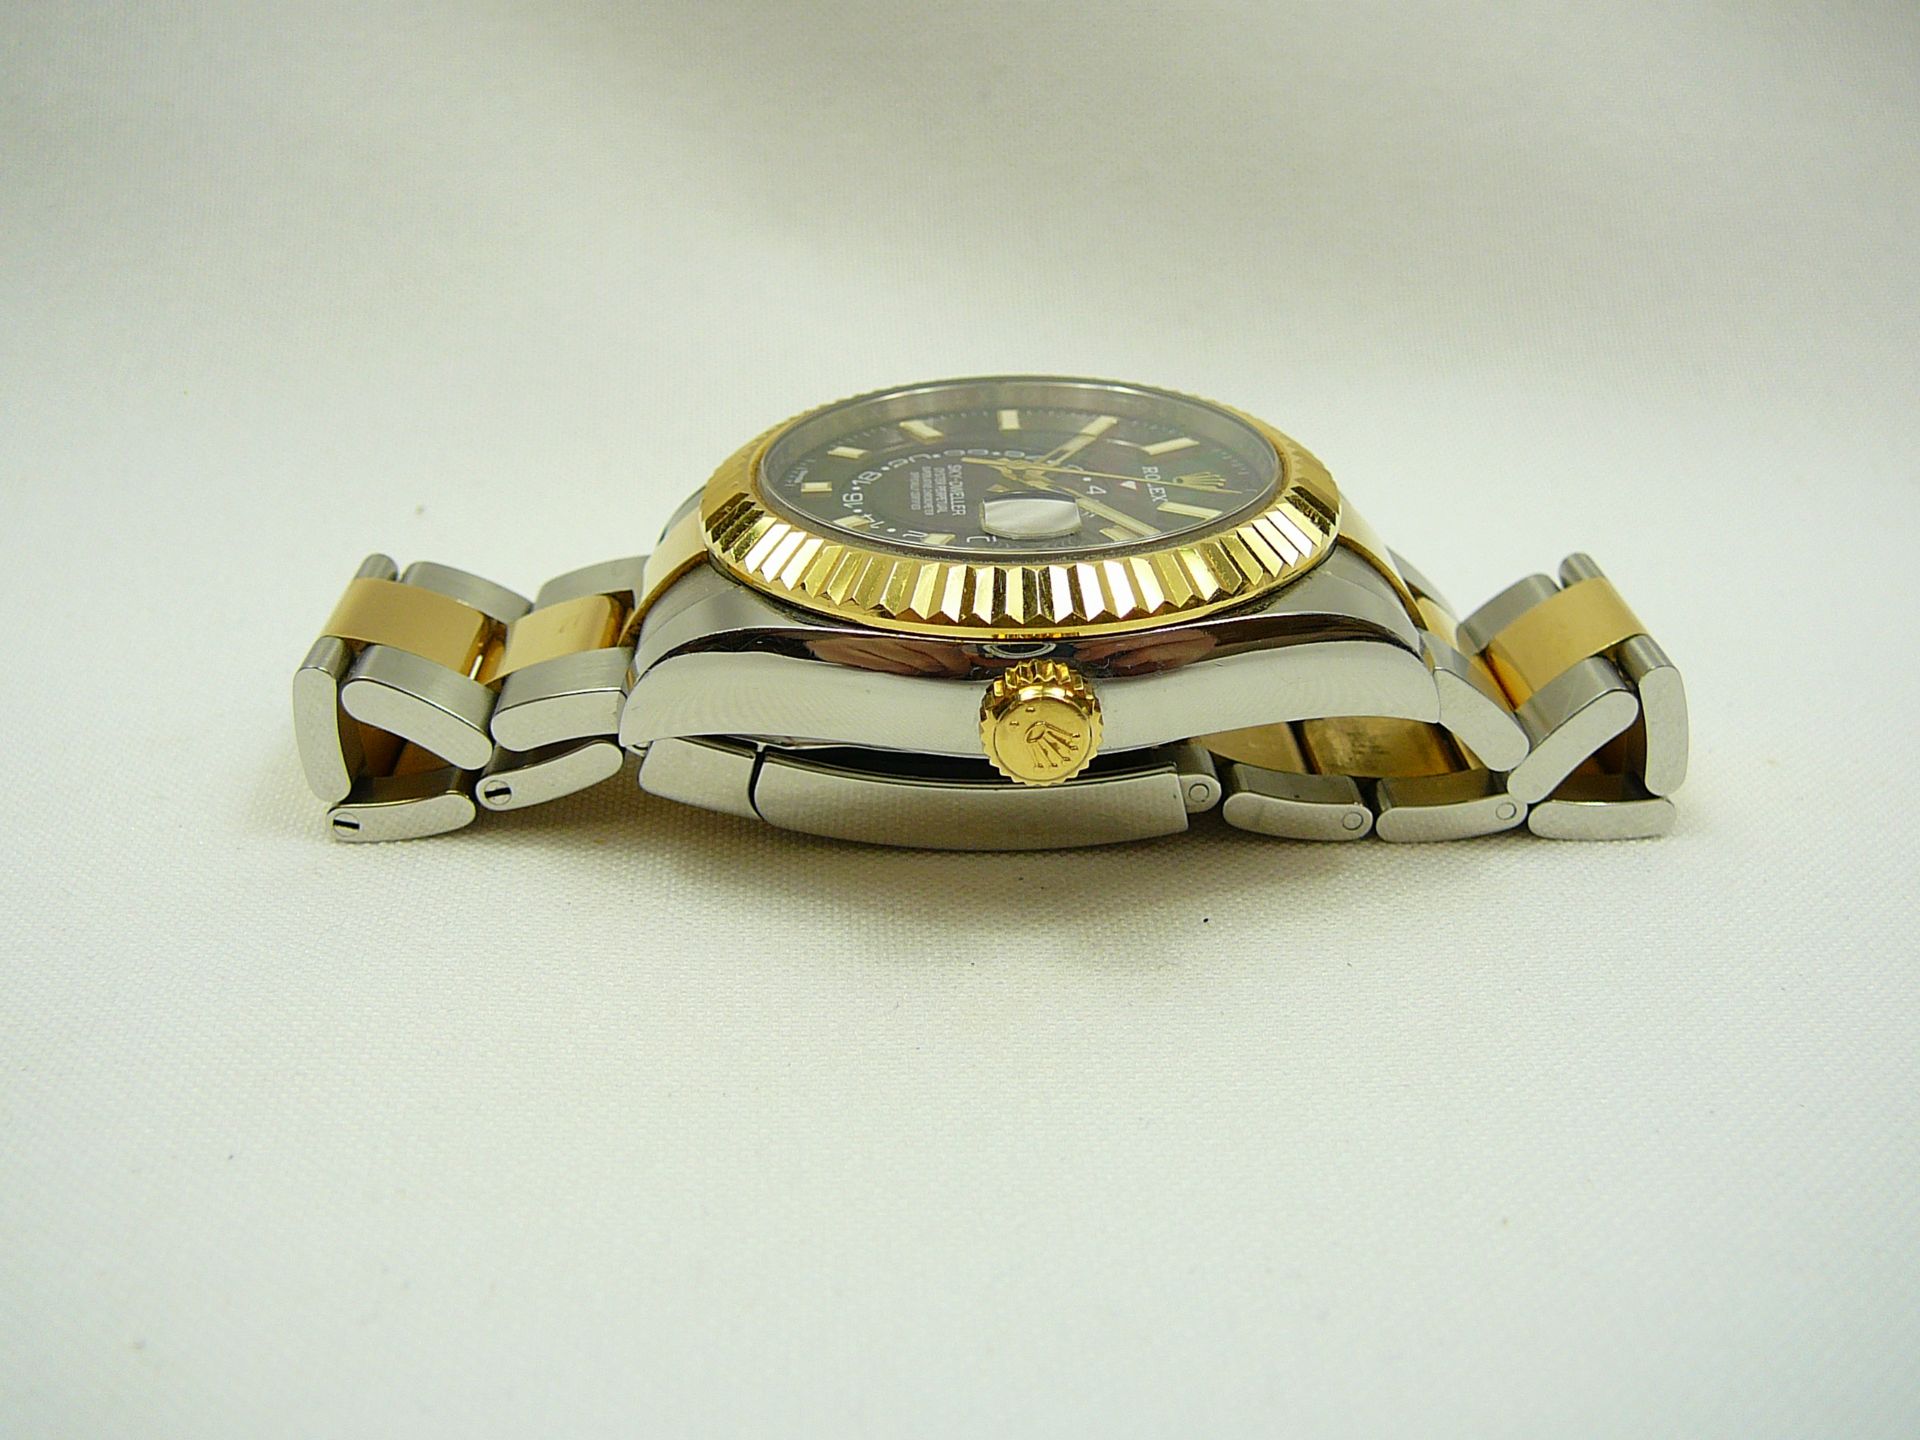 Gents Rolex Wristwatch - Image 7 of 10